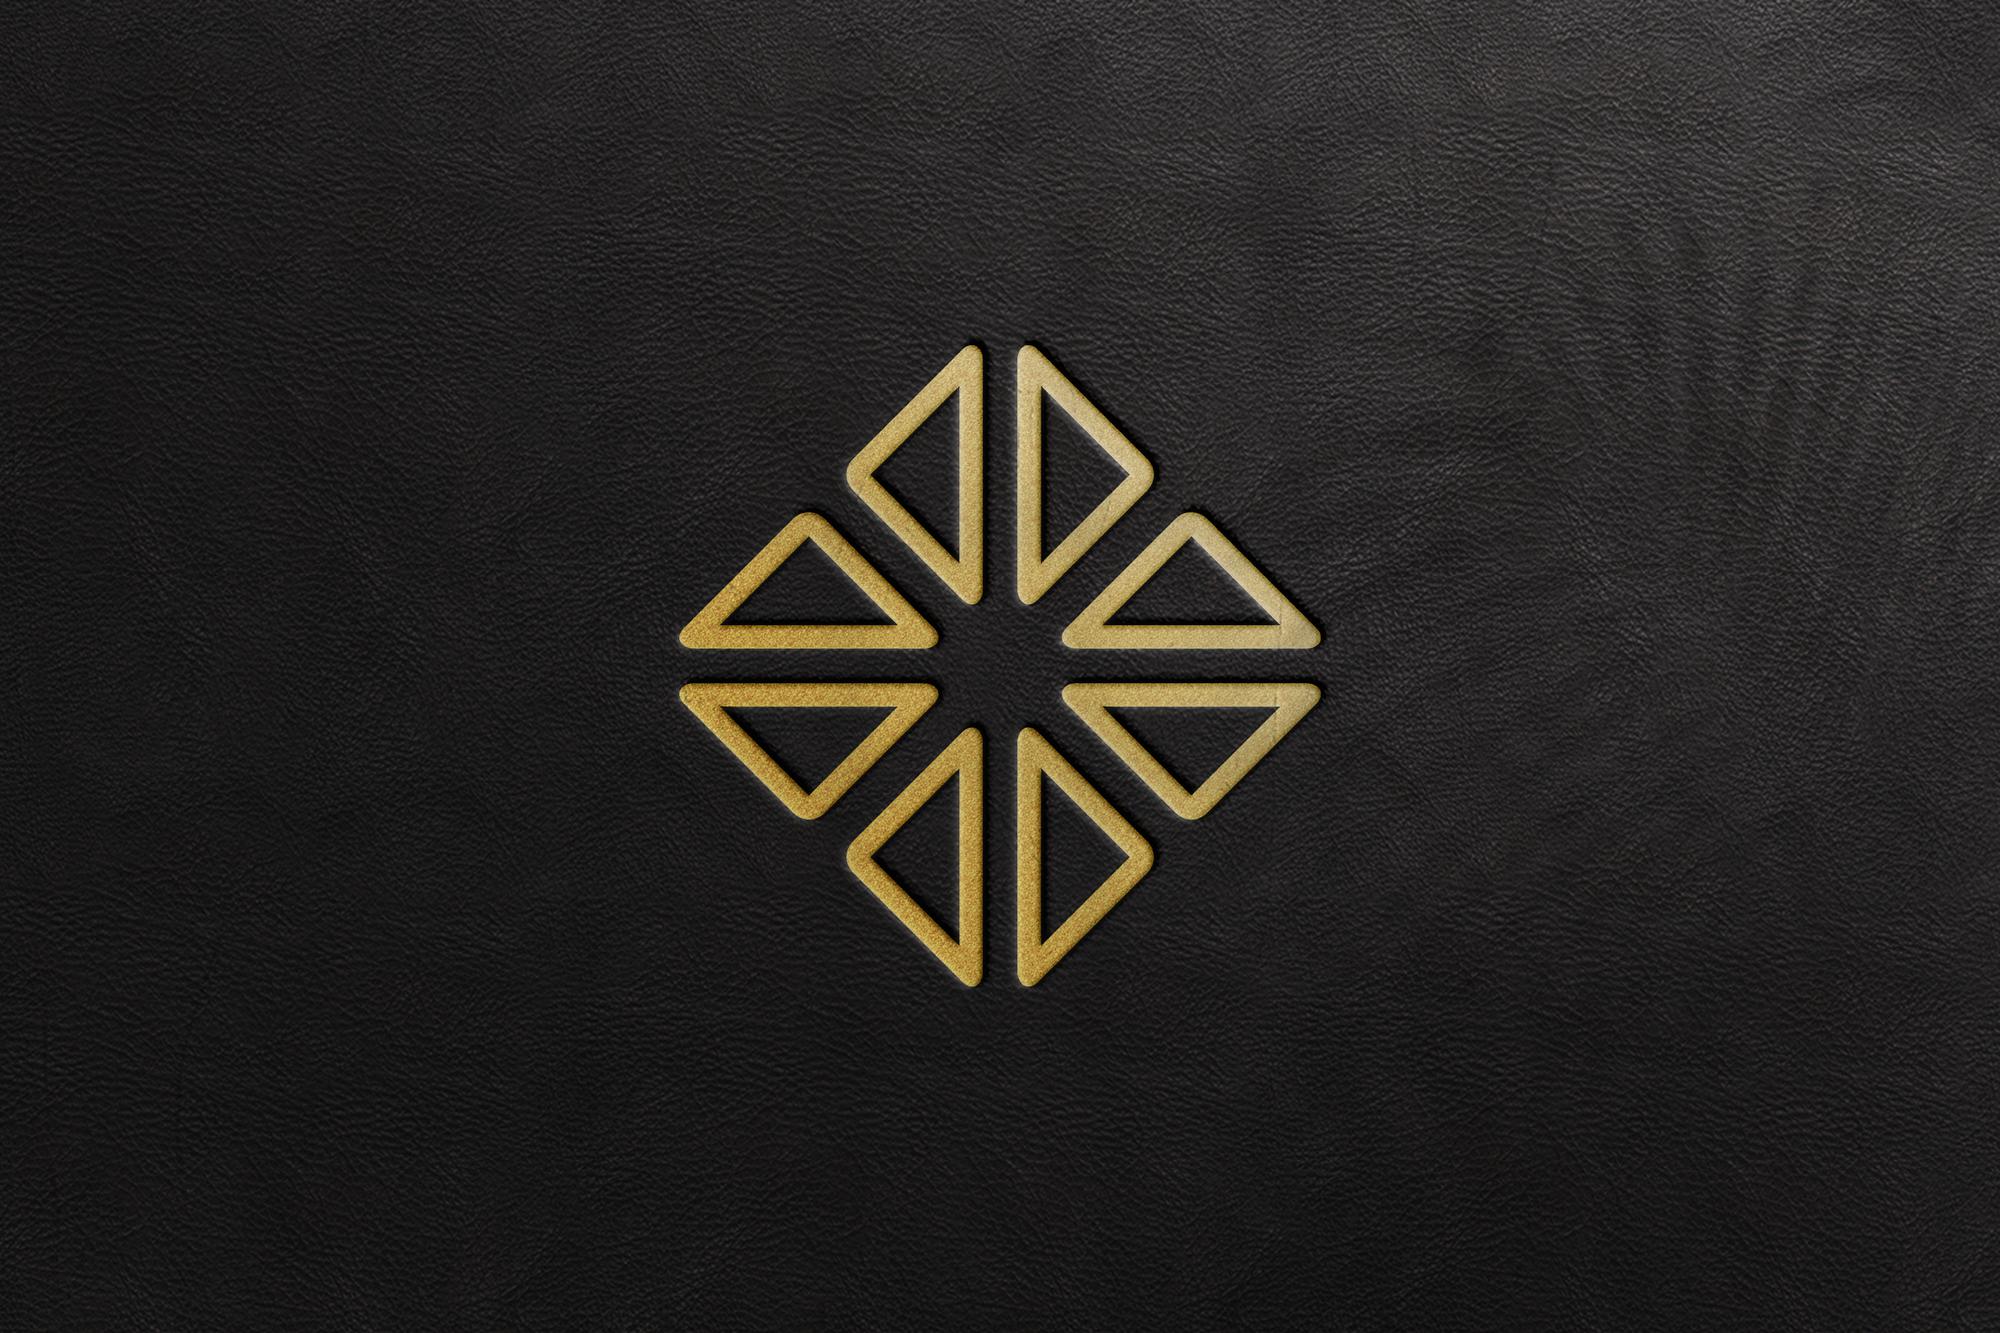 Download Premium PSD | Luxury logo mockup design isolated